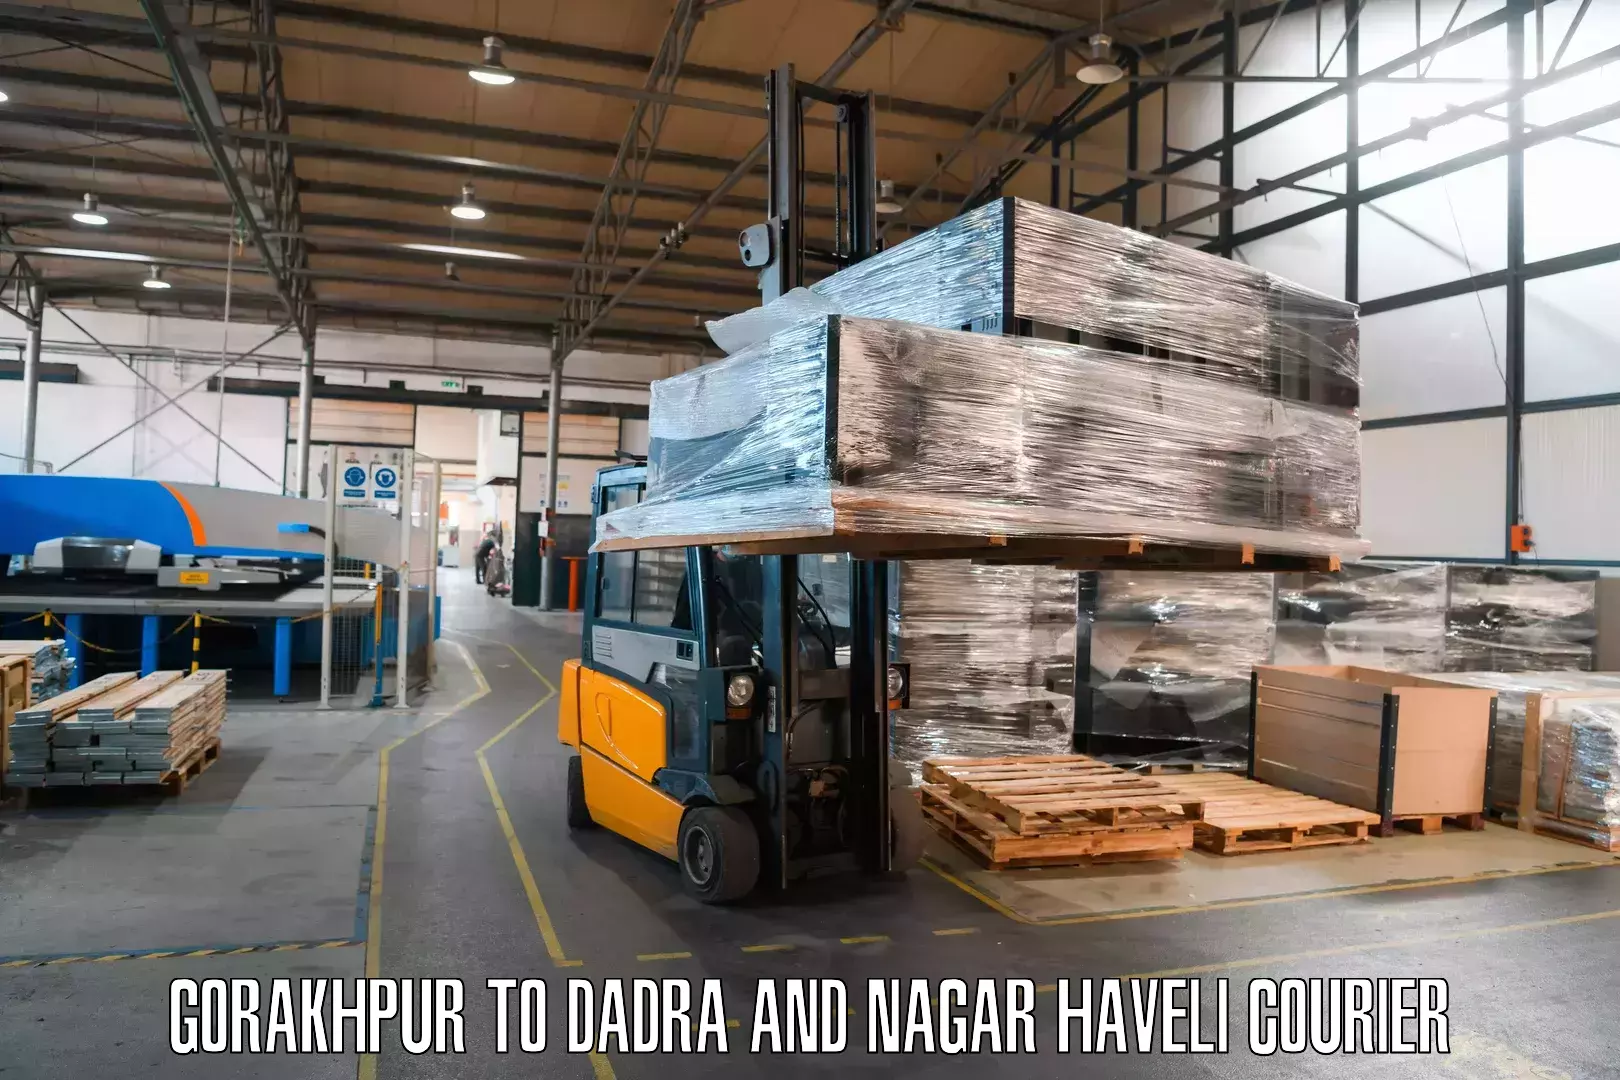 Courier service innovation in Gorakhpur to Dadra and Nagar Haveli